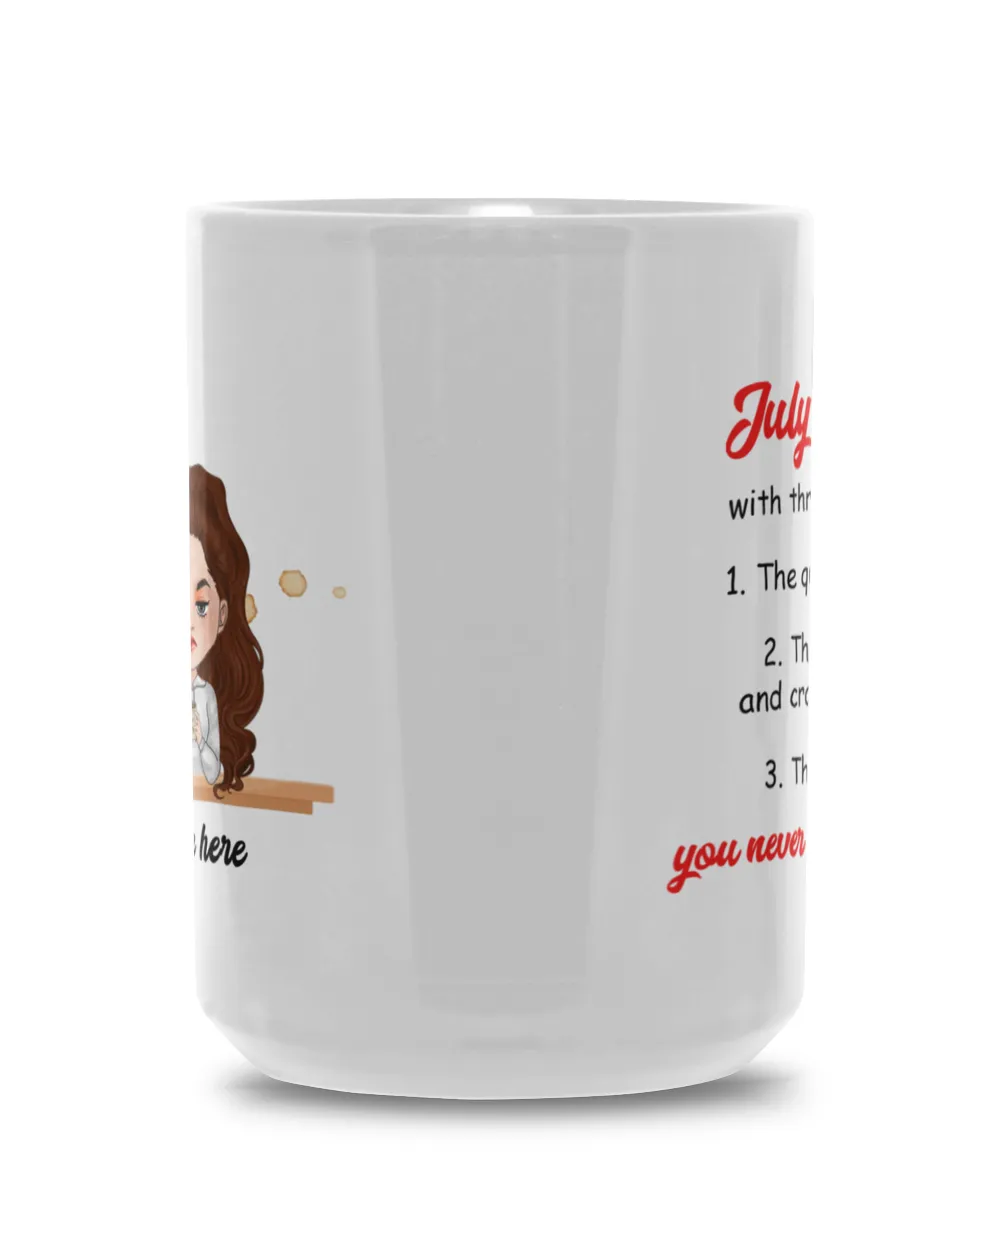 Grumpy Girl Coffee Custom Mug July Girl With Three Sides Personalized Gift